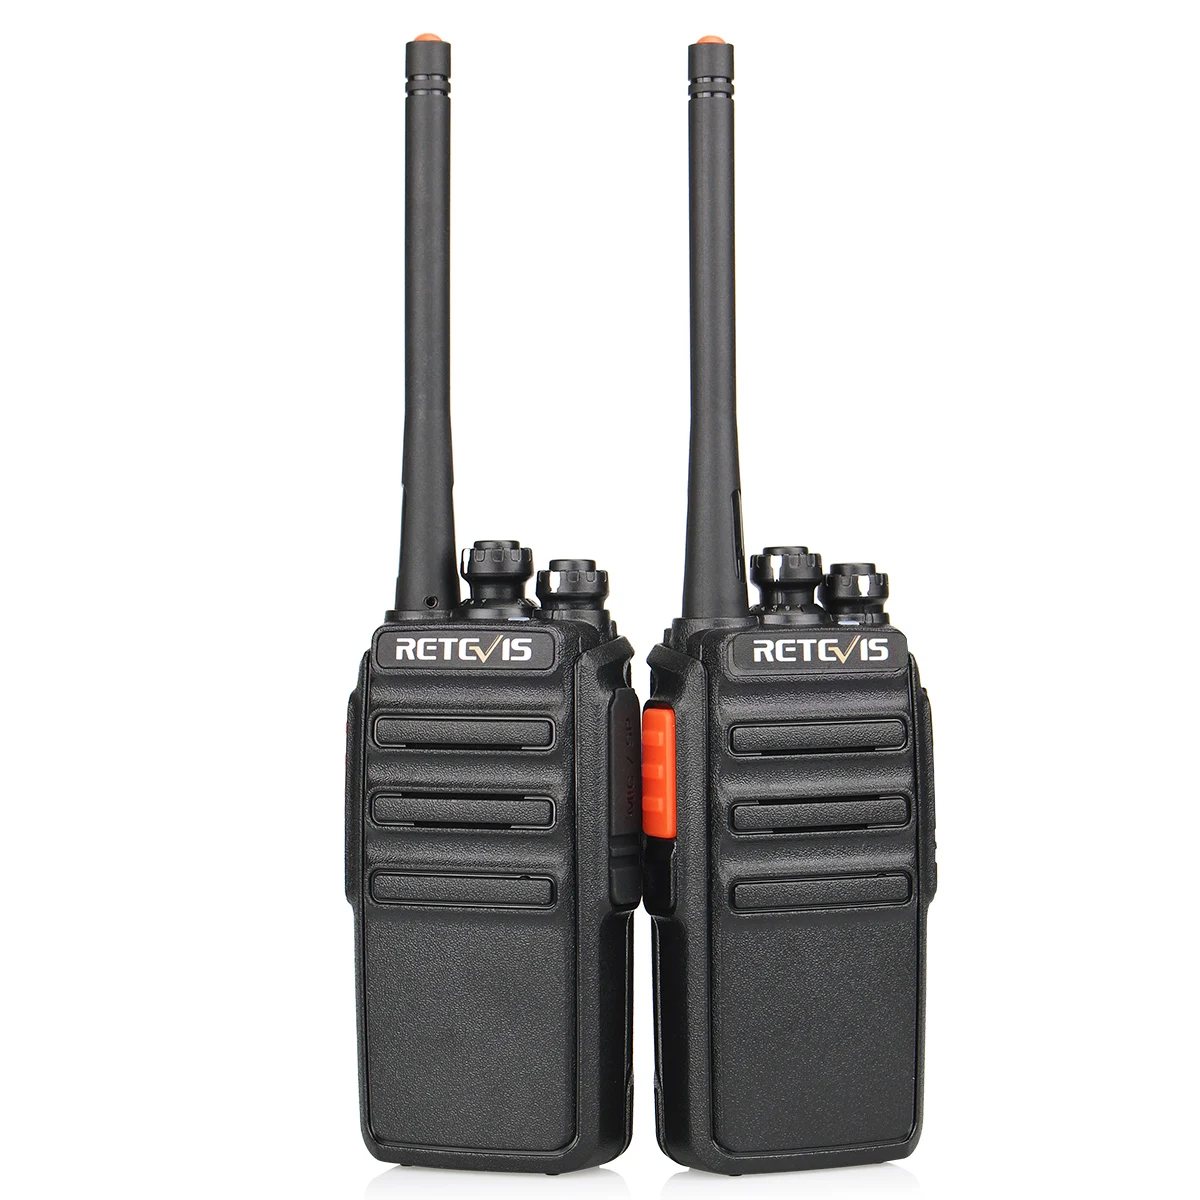 Retevis H777S long range restaurant walkie talkie receiver UHF high frequency Handheld Two Way Radio 16CH License-Free VOX Scan